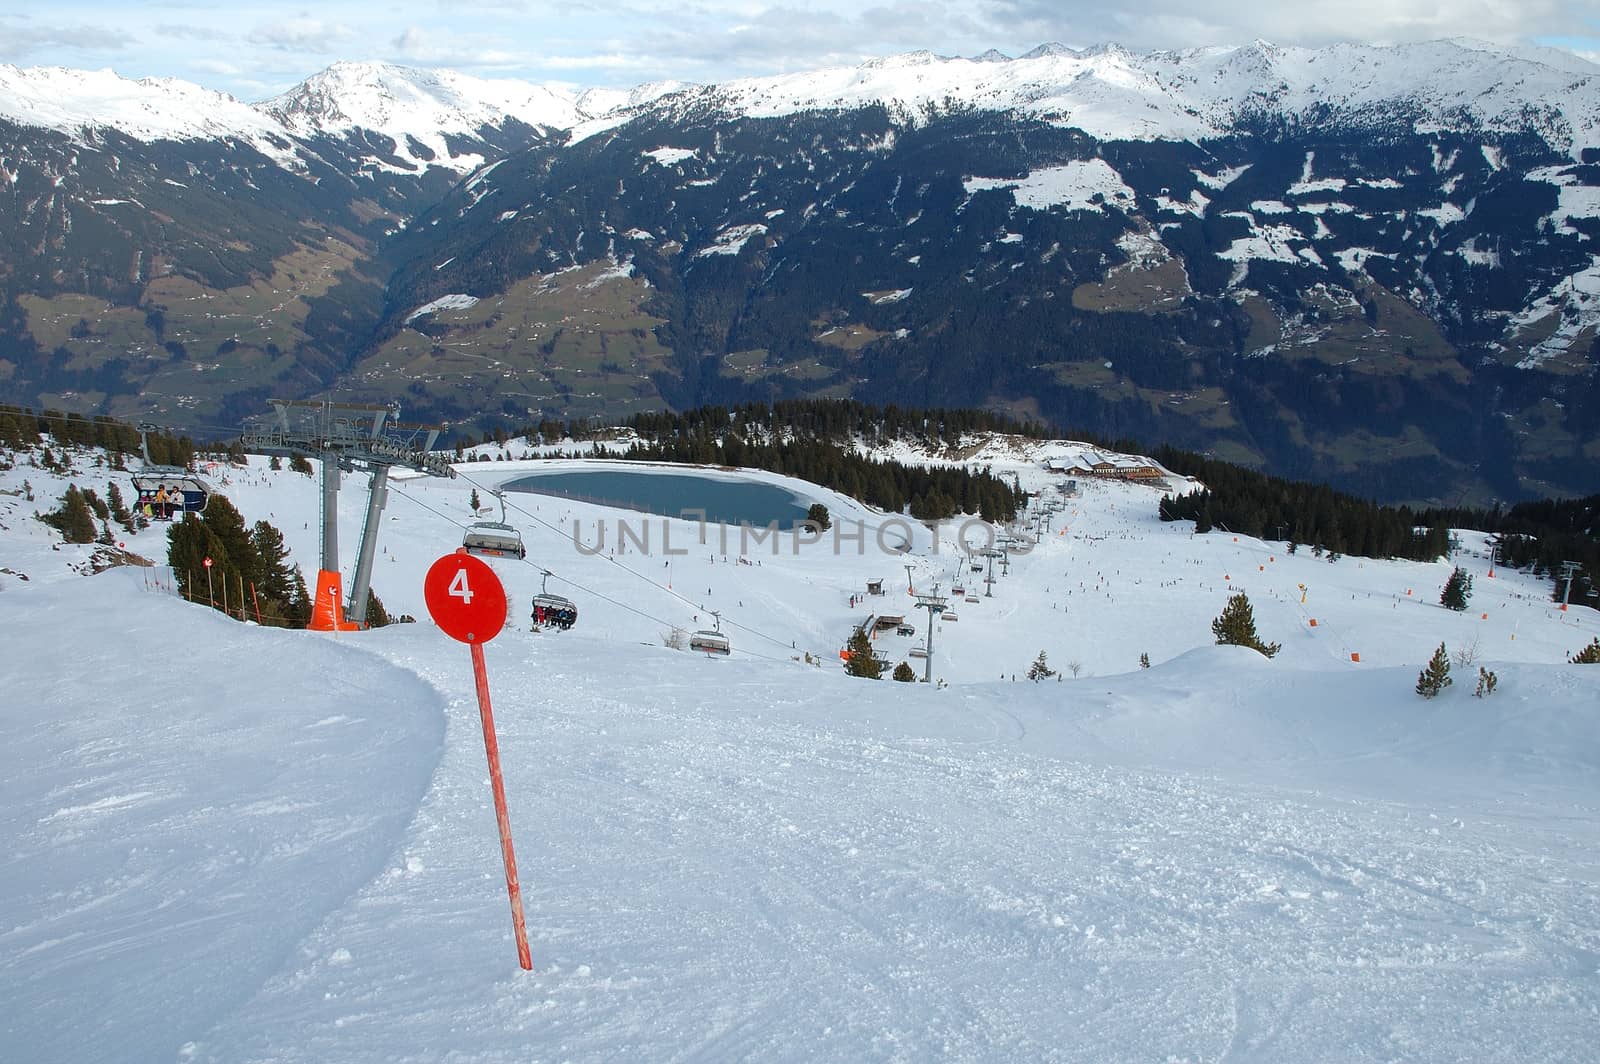 Ski slope and slope number sign by janhetman